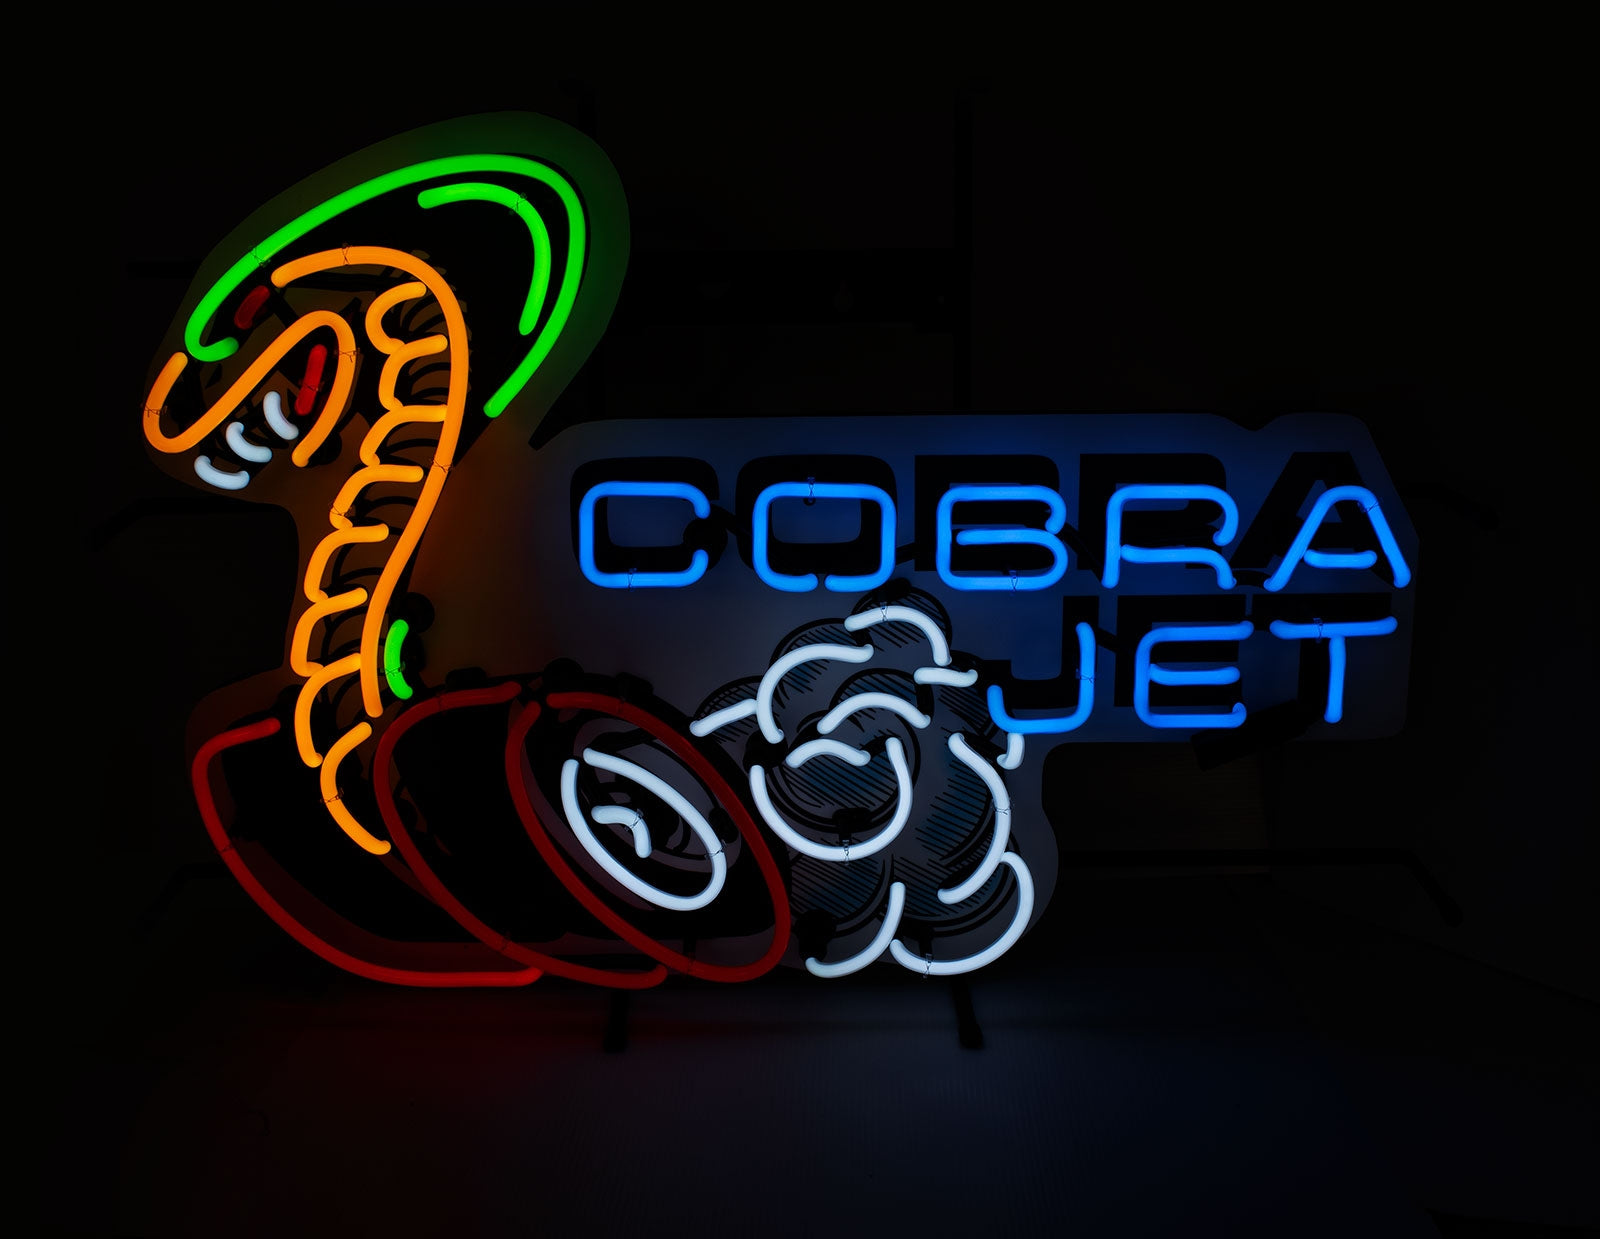 Ford Mustang Cobra Jet Snake 30" x 21" Neon Light Up Garage Wall Sign